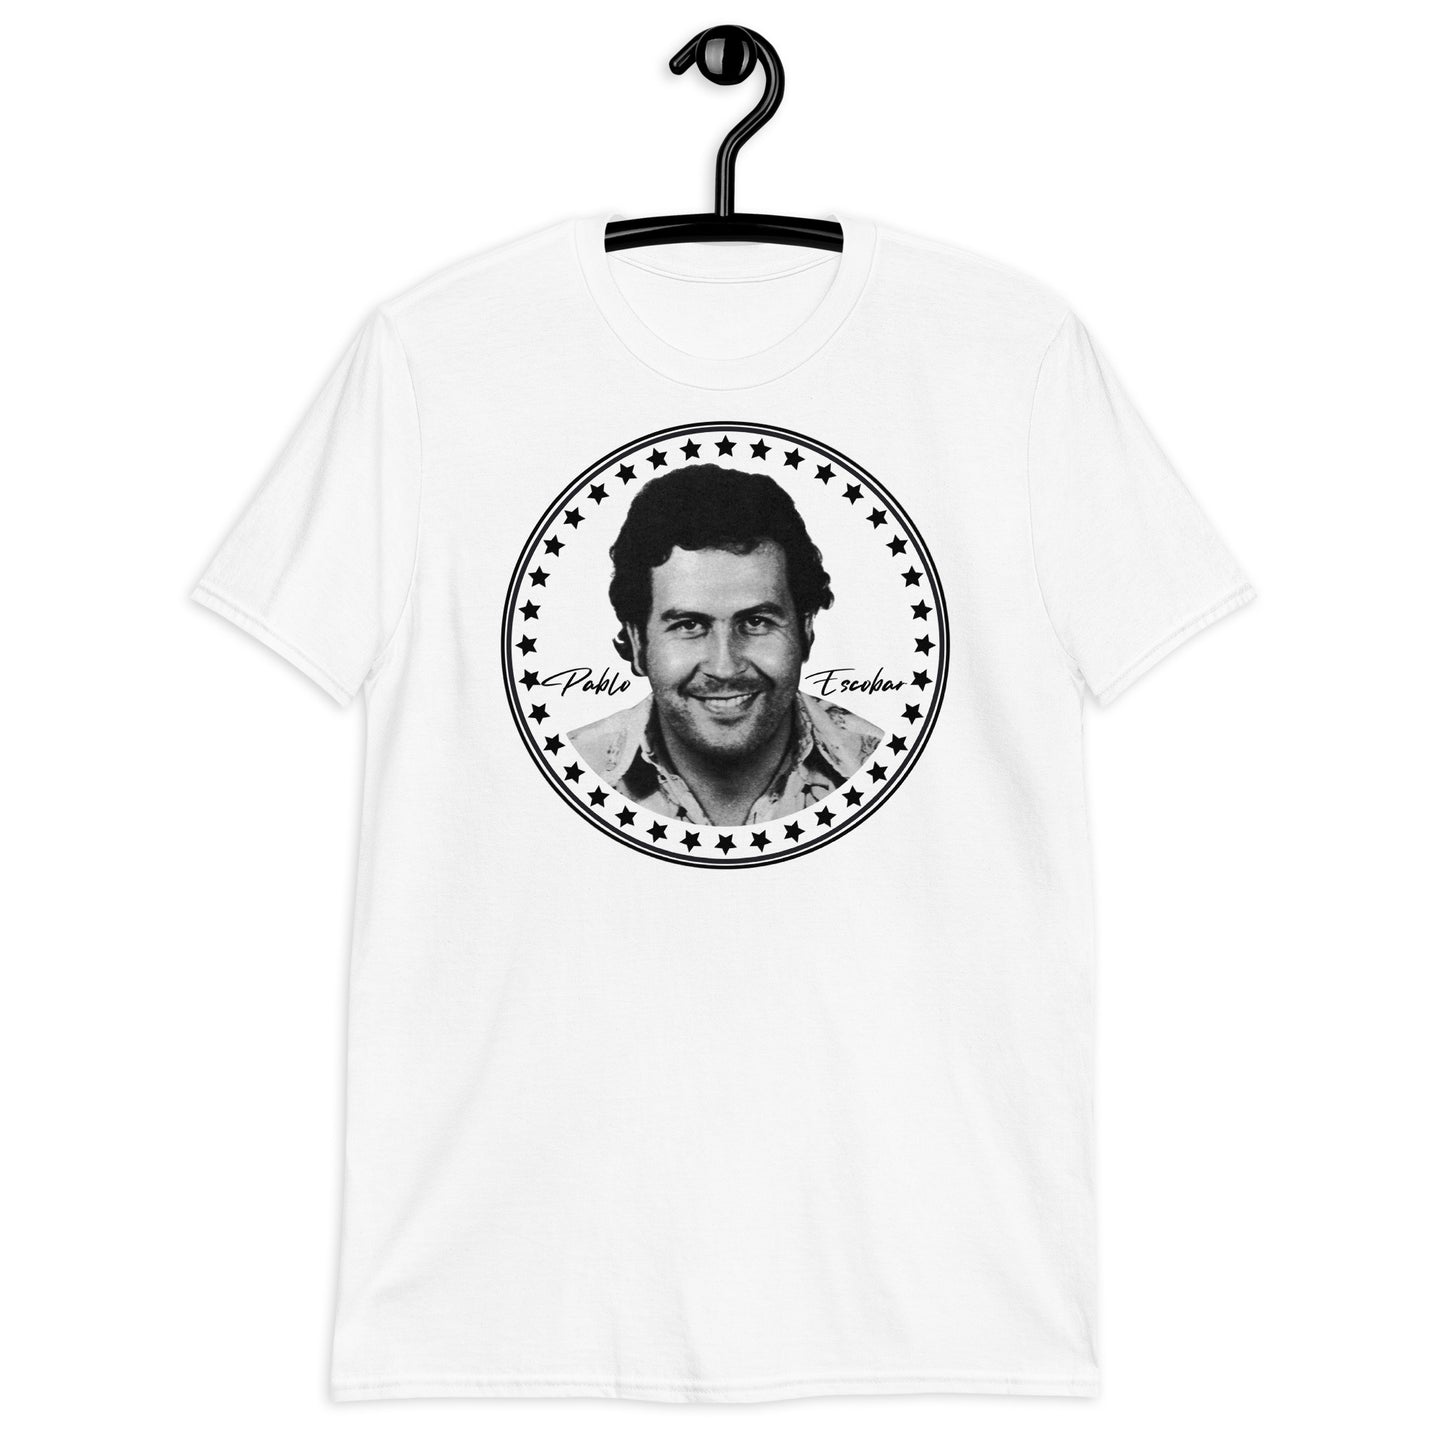 Pablo Escobar El Patron , Cartel de Medellin Graphic Tee Shirt Short-Sleeve Unisex T-Shirt